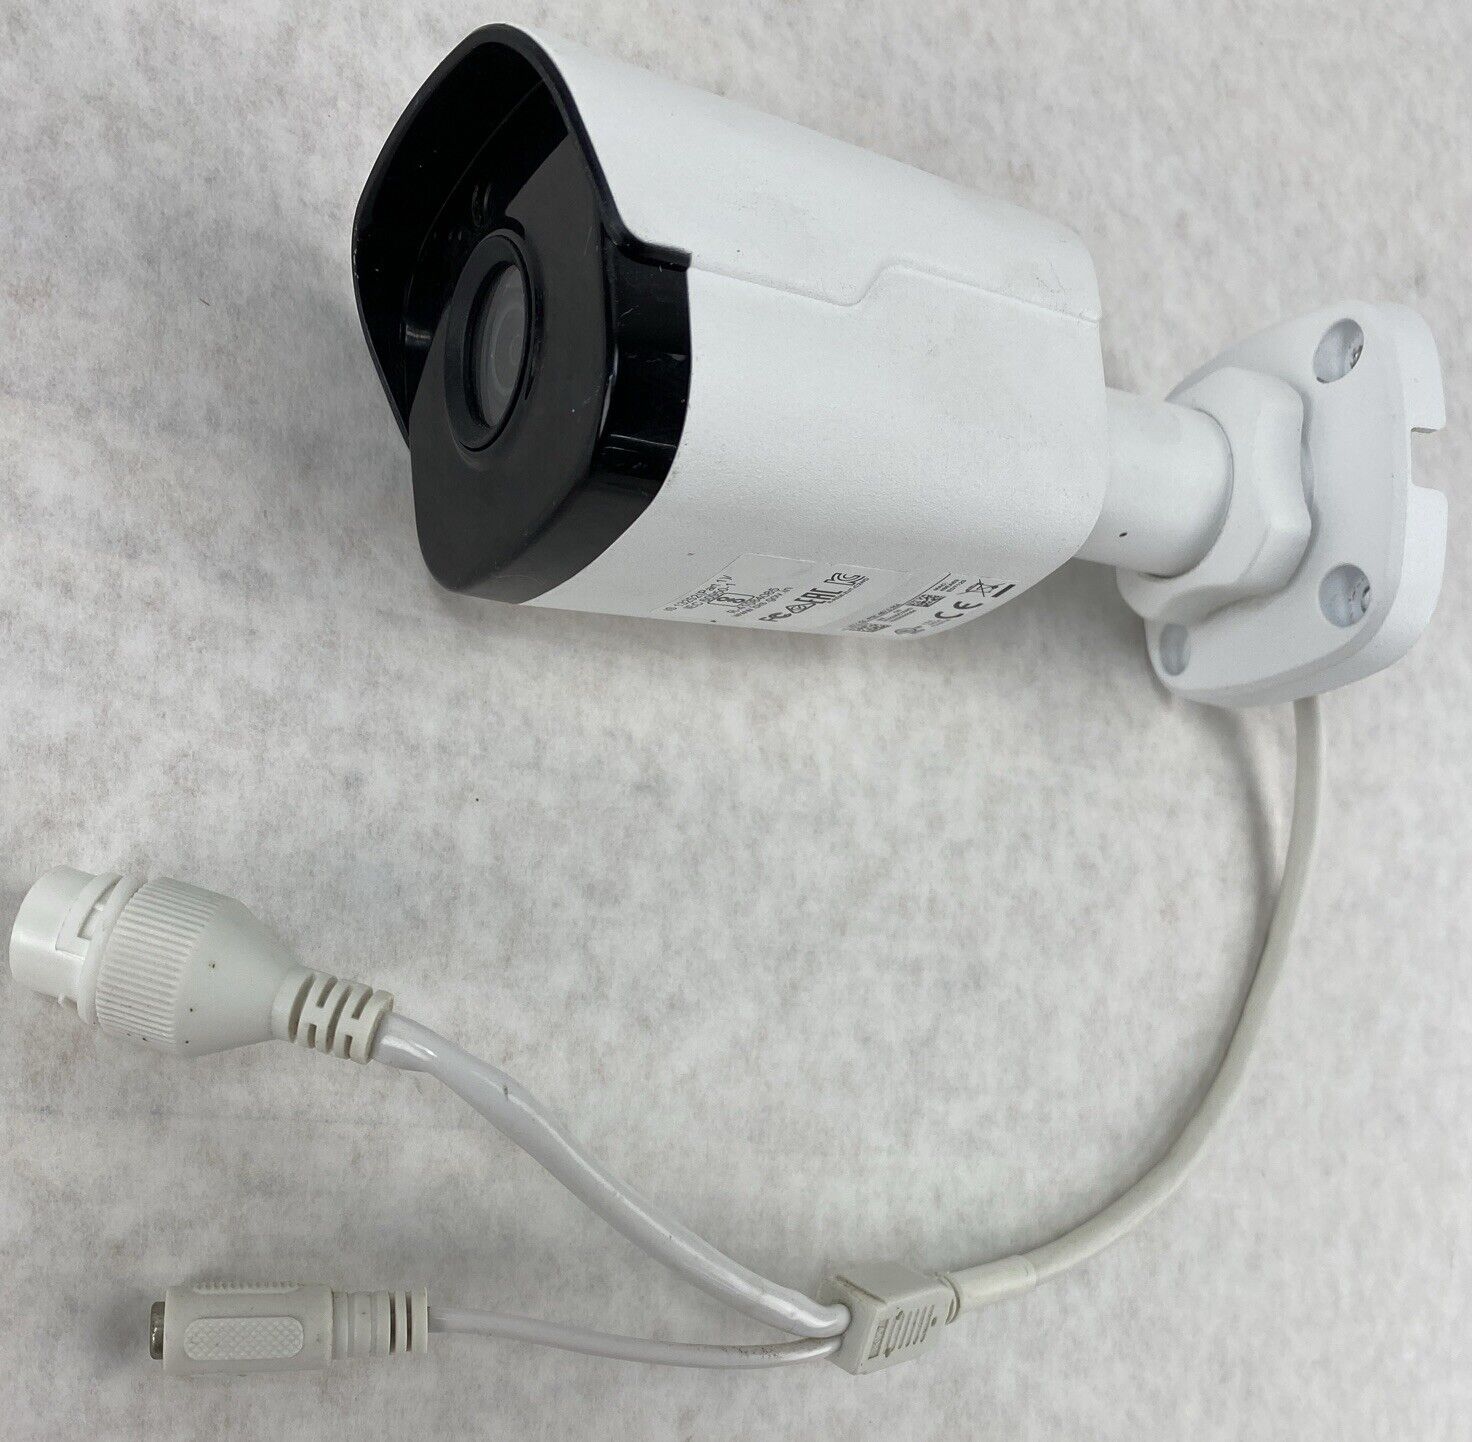 Unbranded IPB540 IP Camera Outdoor Indoor Surveillance Camera TESTED